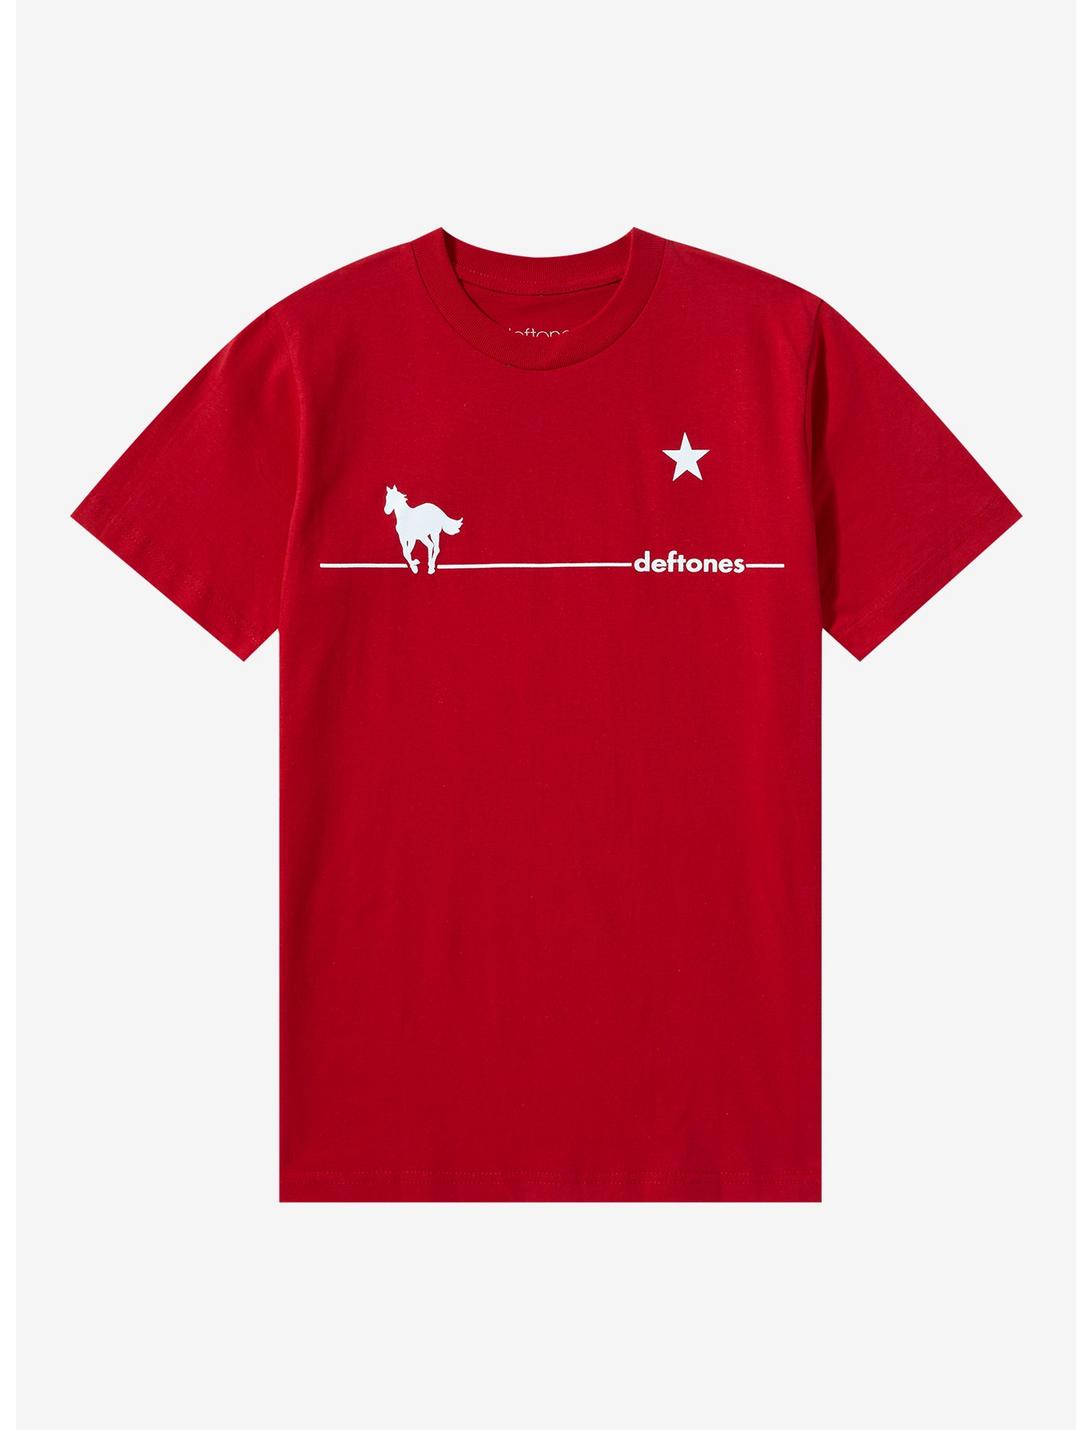 Deftones White Pony Boyfriend Fit Girls T-Shirt, RED, hi-res